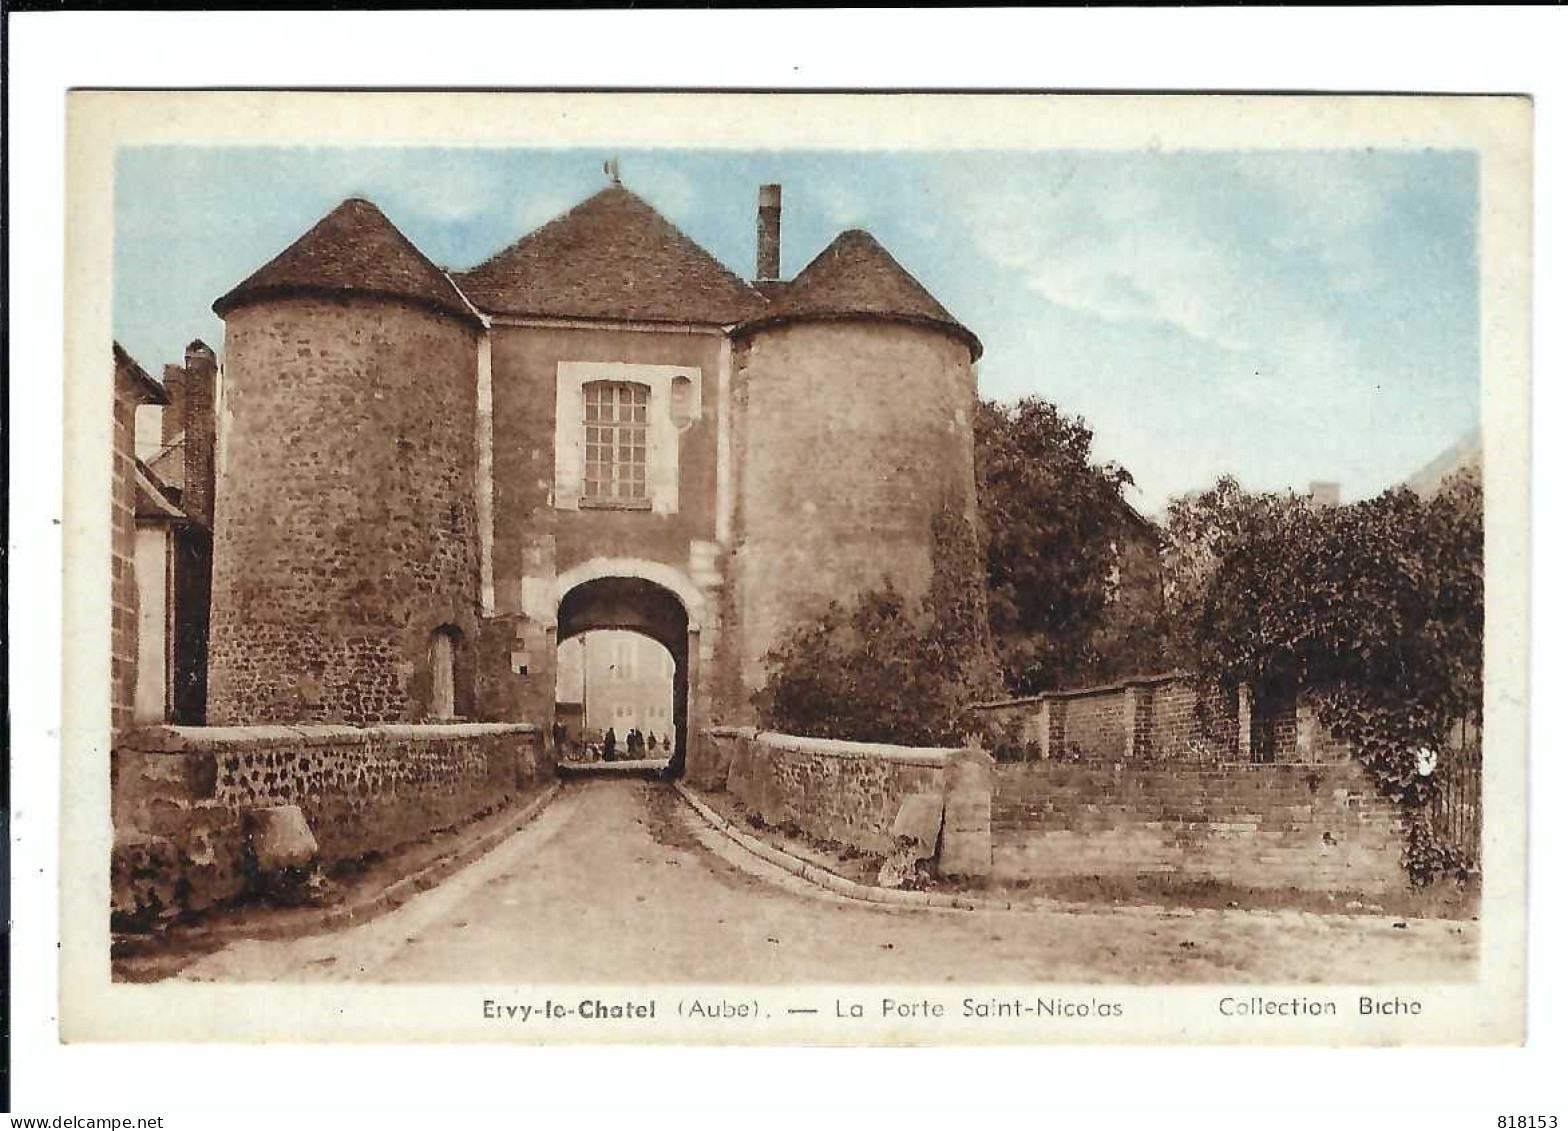 Ervy-le-Chatel (Aube) - La Porte Saint-Nicolas - Ervy-le-Chatel